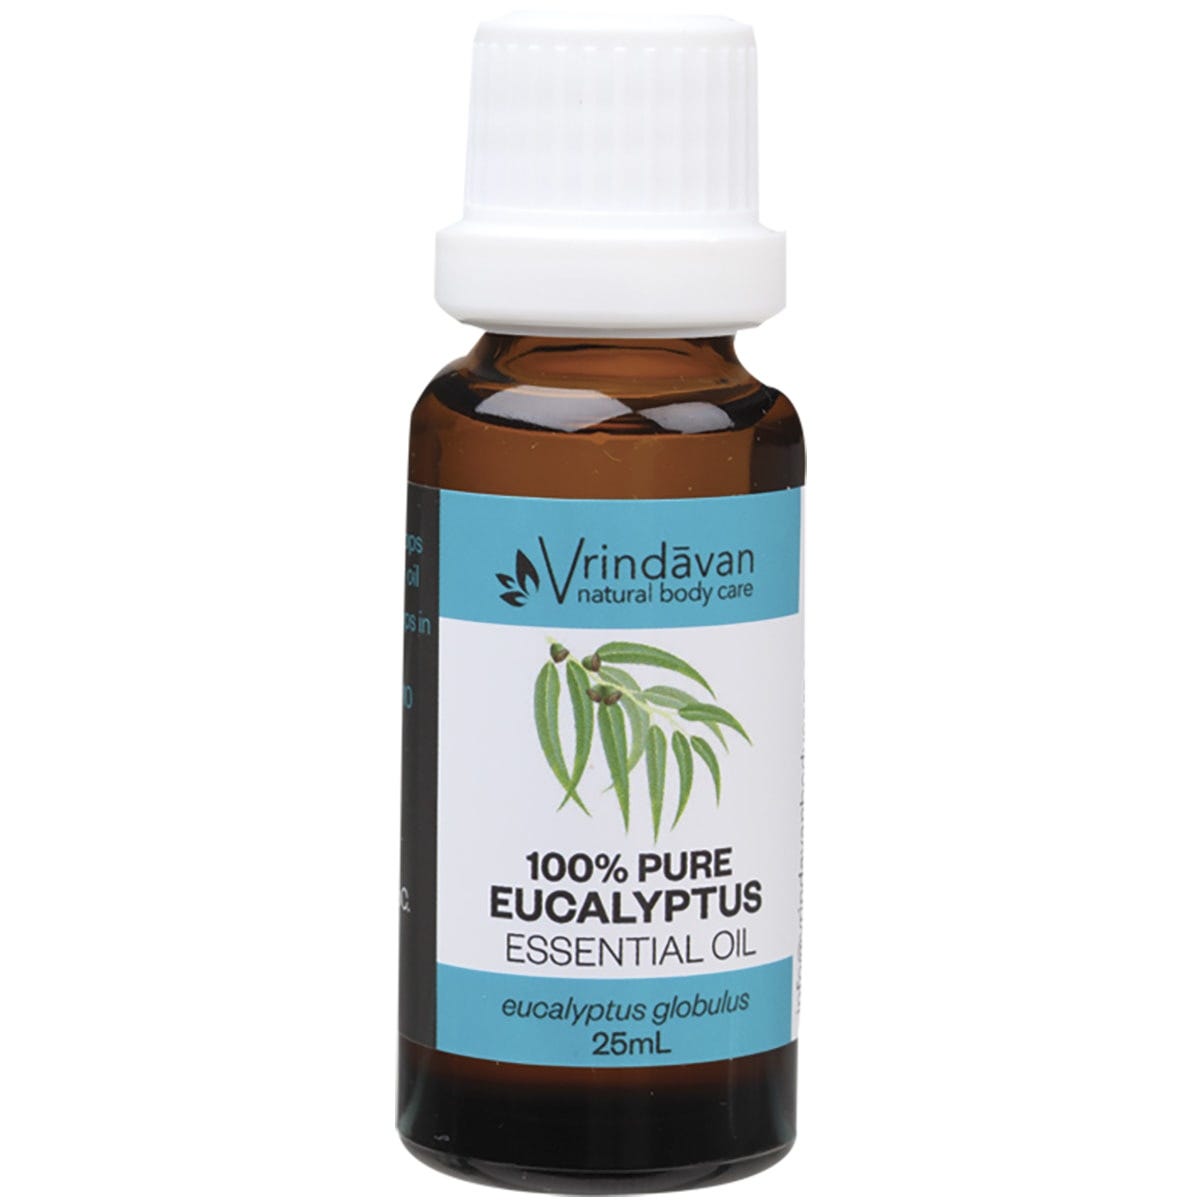 Vrindavan Essential Oil 100% Eucalyptus 25ml - Dr Earth - Aromatherapy